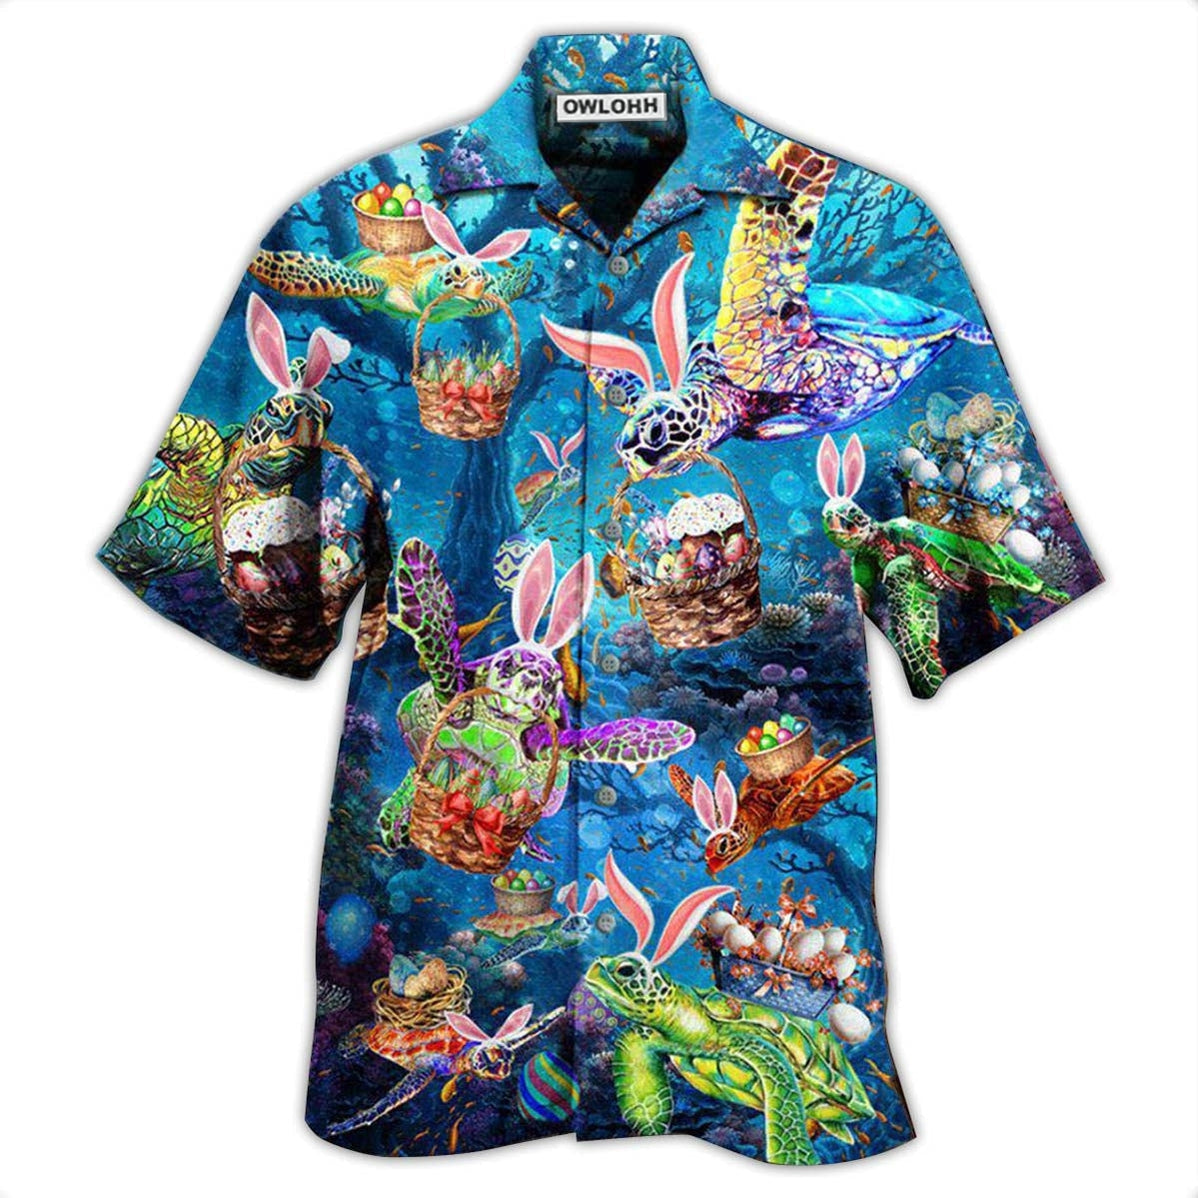 Hawaiian Shirt / Adults / S Turtle Wishing You A Turtley Awesome Easter - Hawaiian Shirt - Owls Matrix LTD